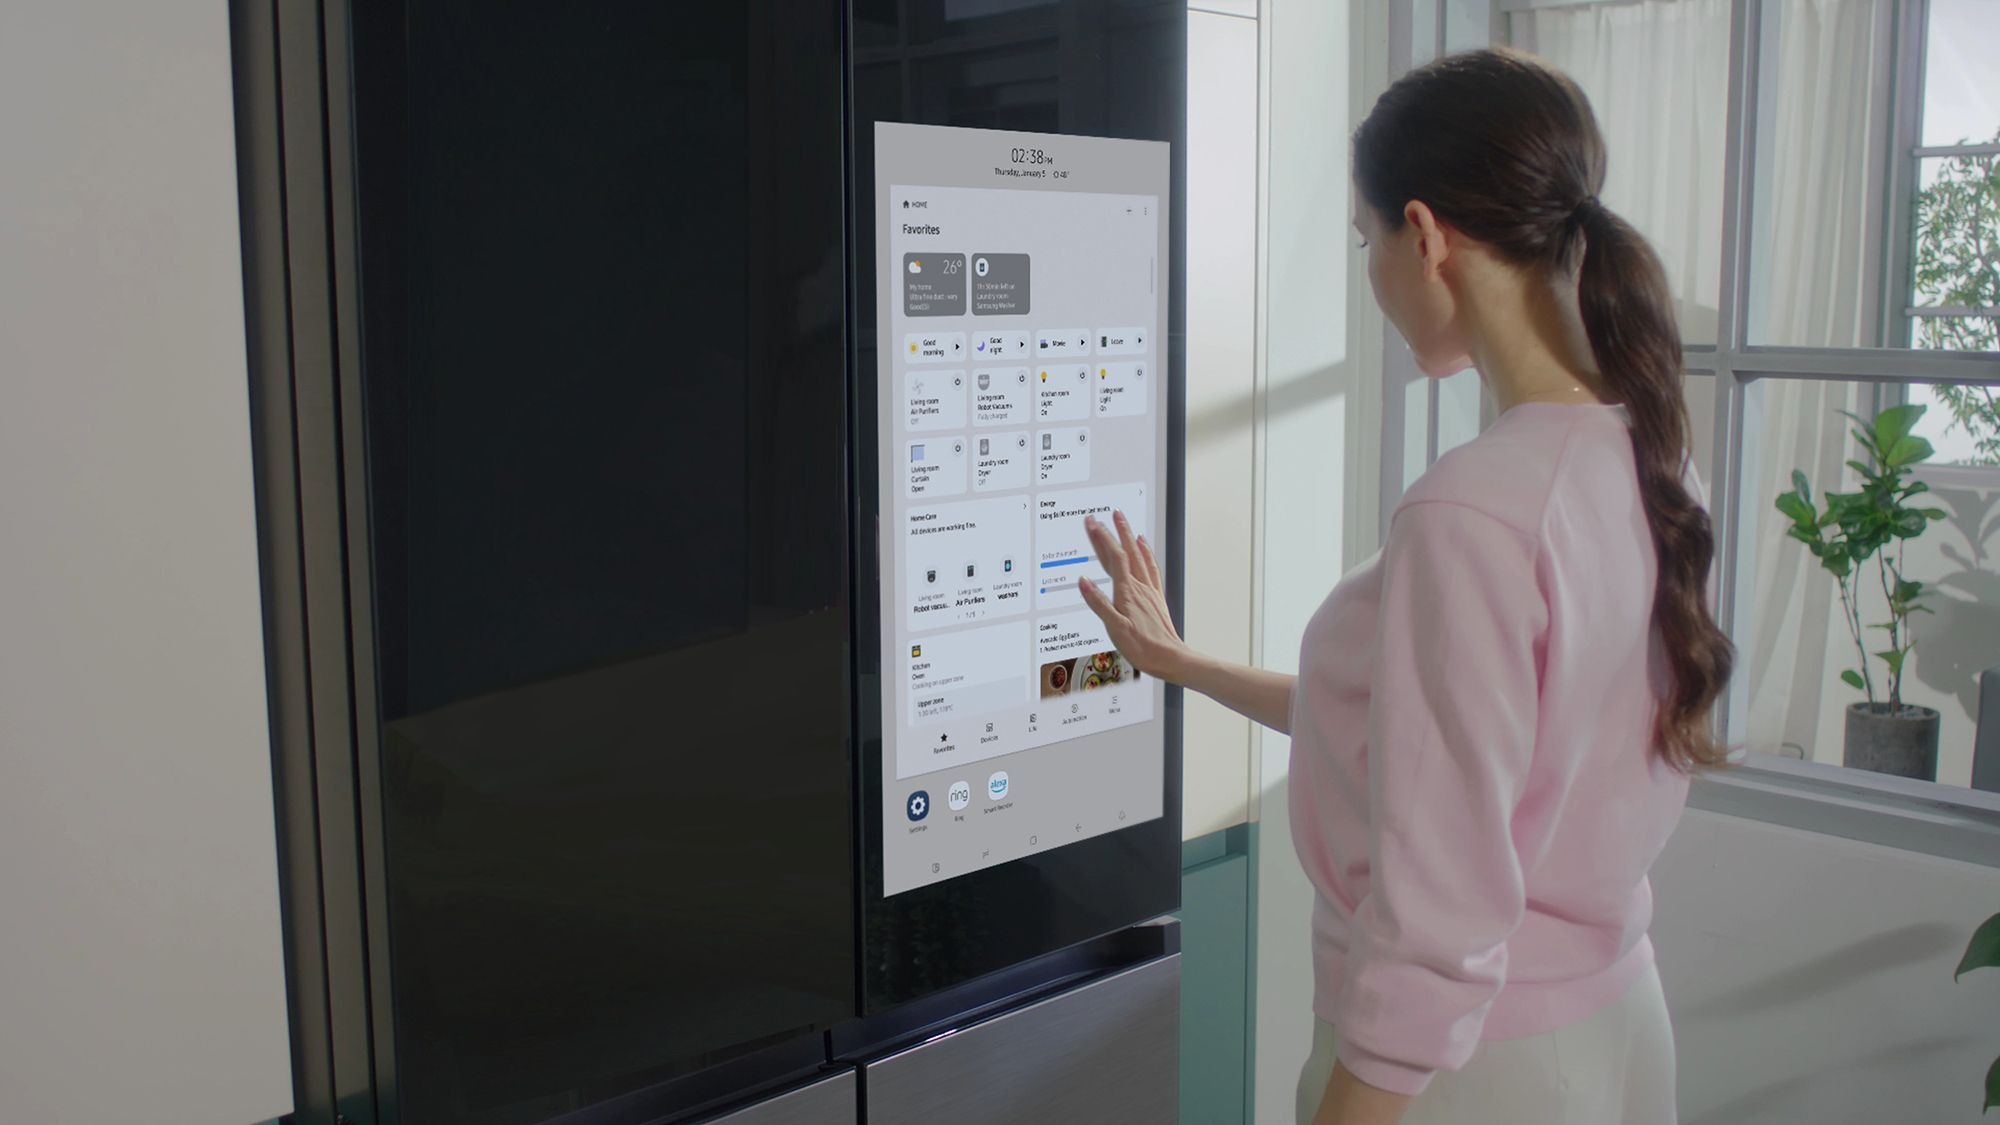 Samsung reveals new smart home appliances during CES 2023